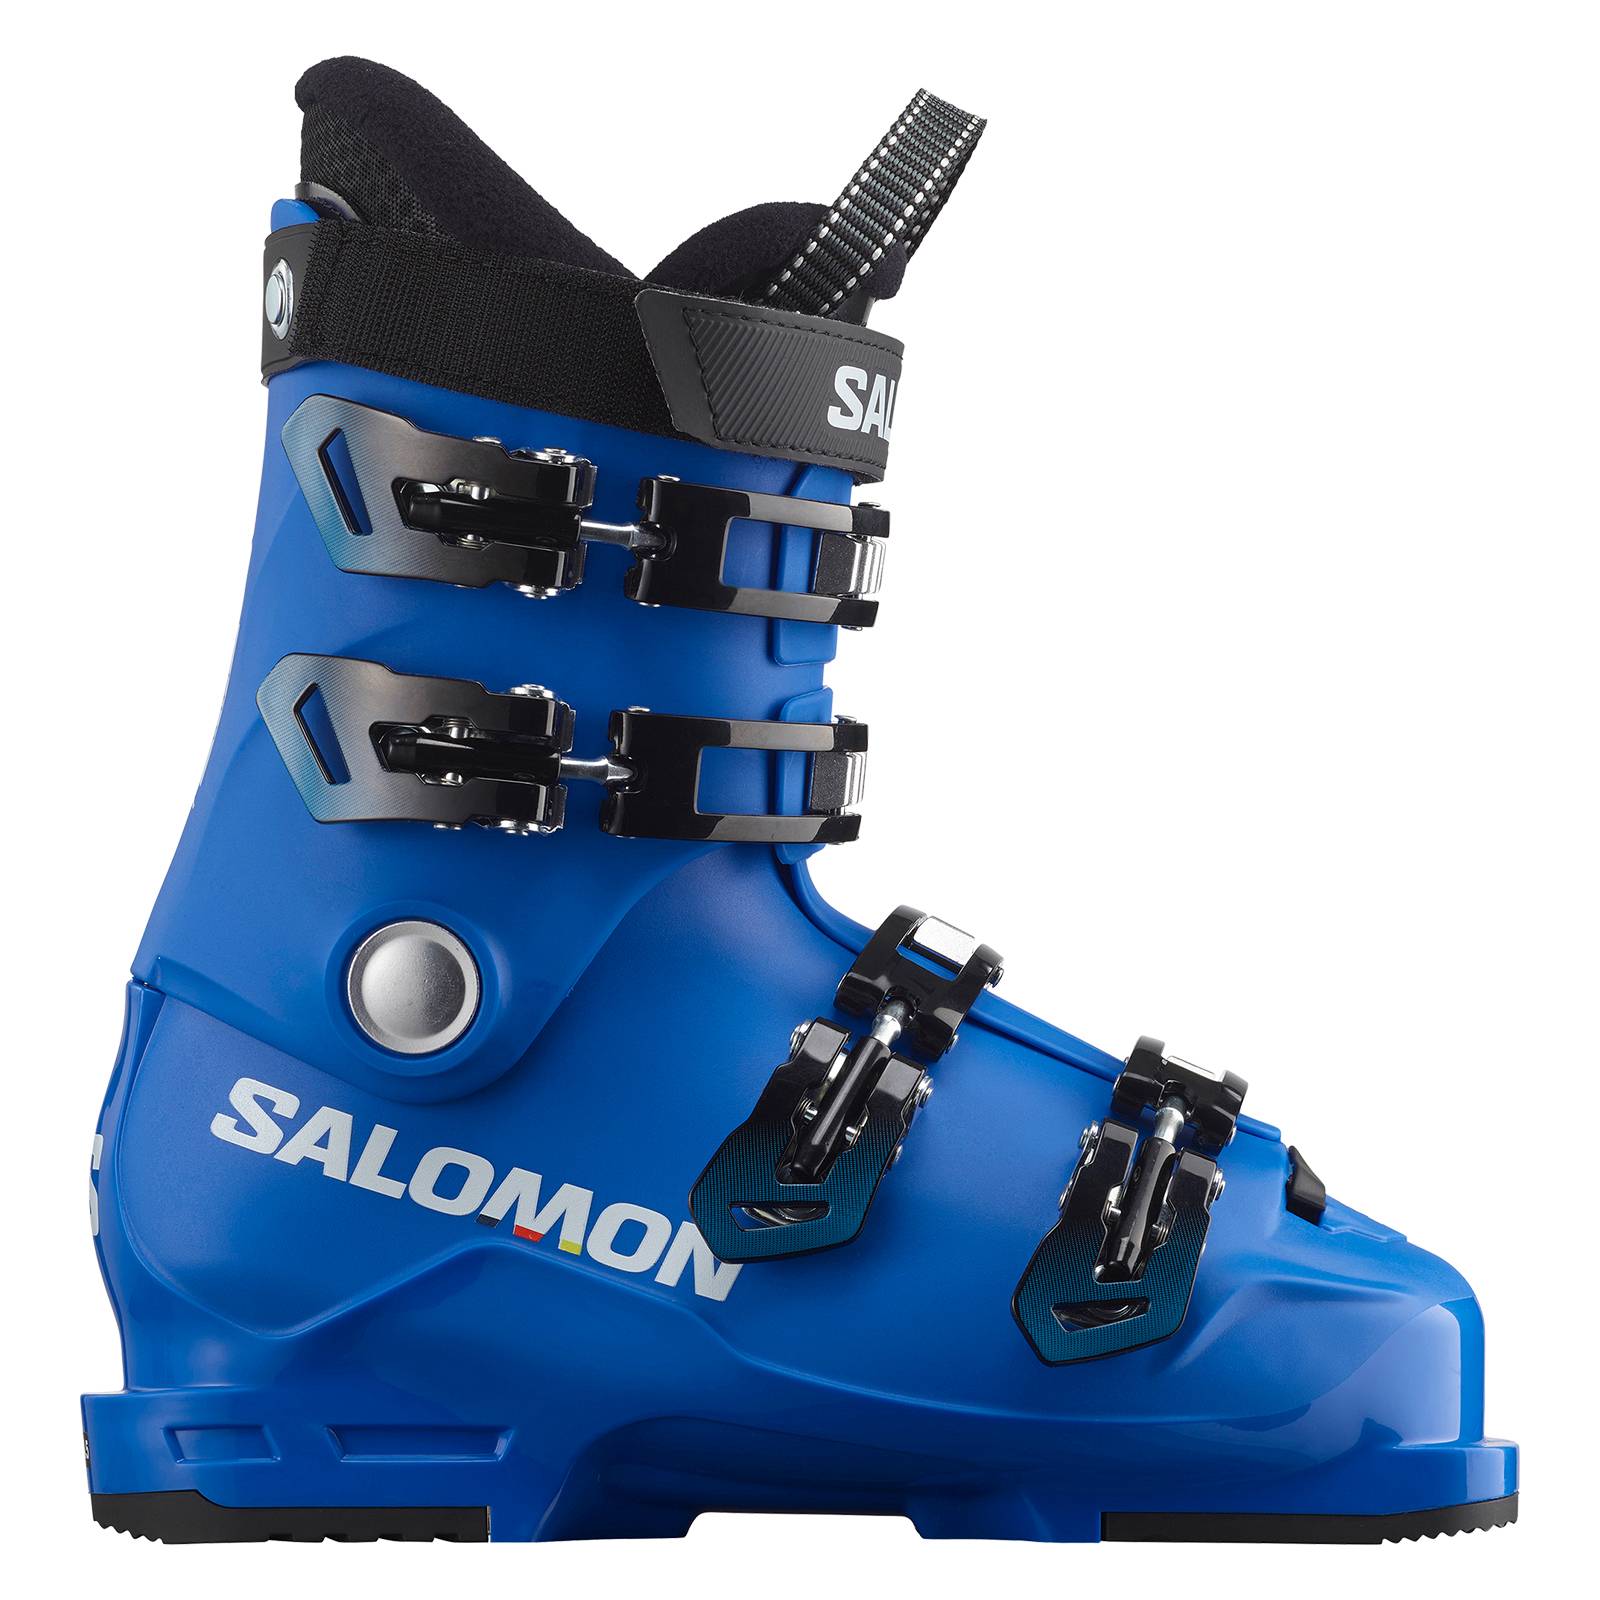 Salomon S/Race 60T Large Kinder Skischuhe blau